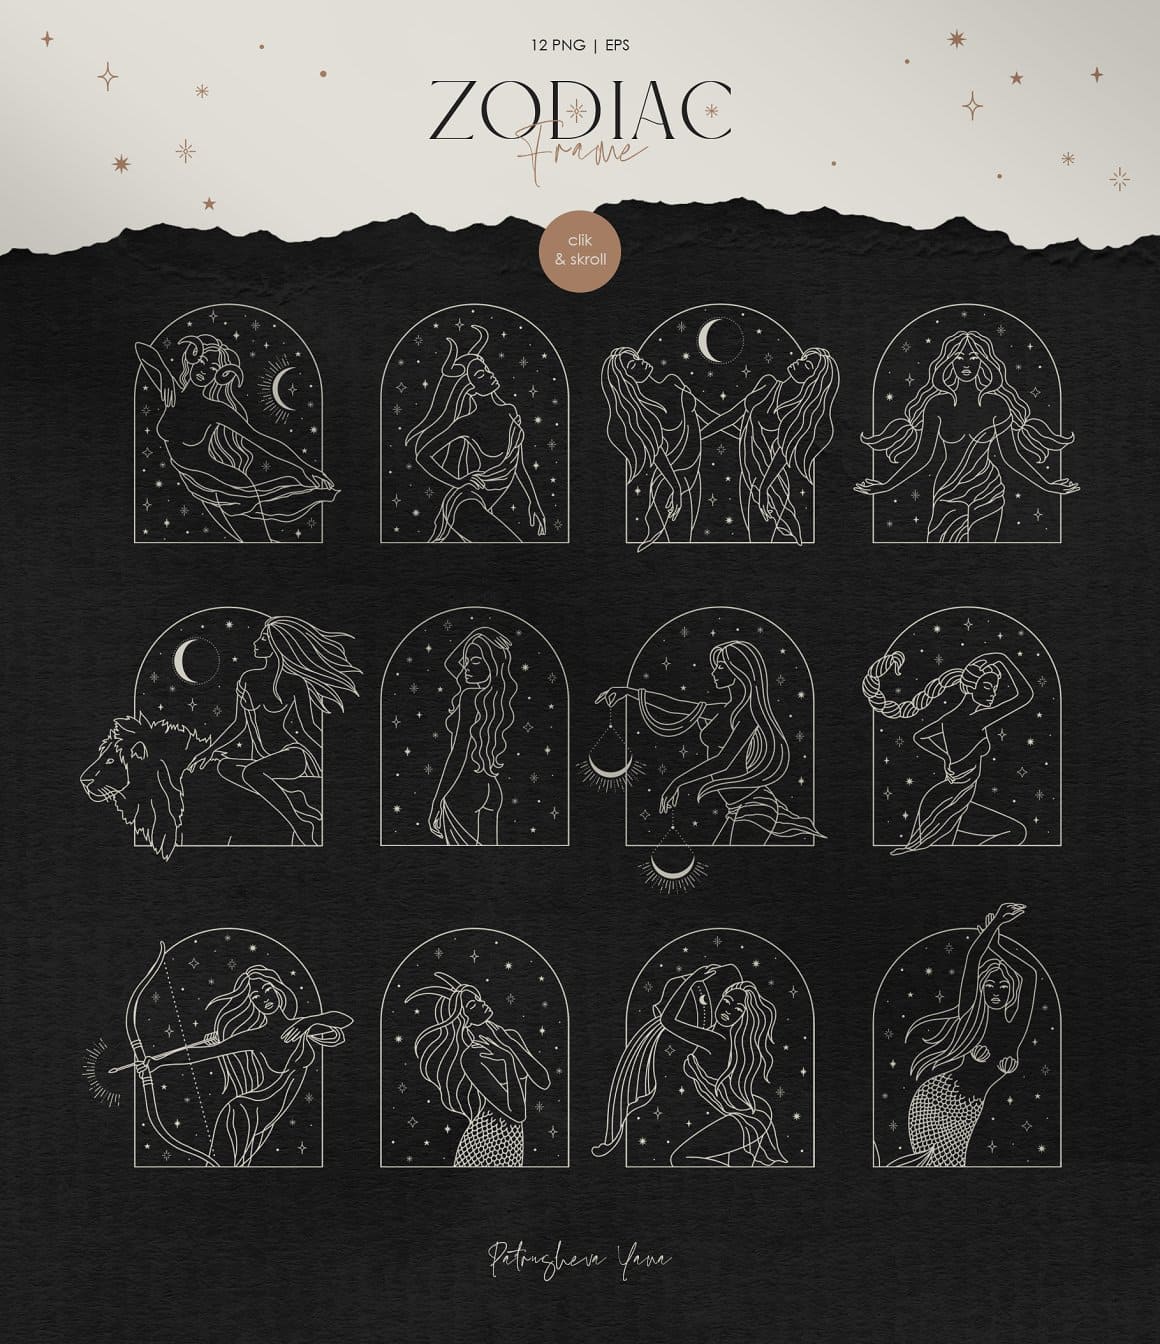 Zodiac Frame on black & white background.